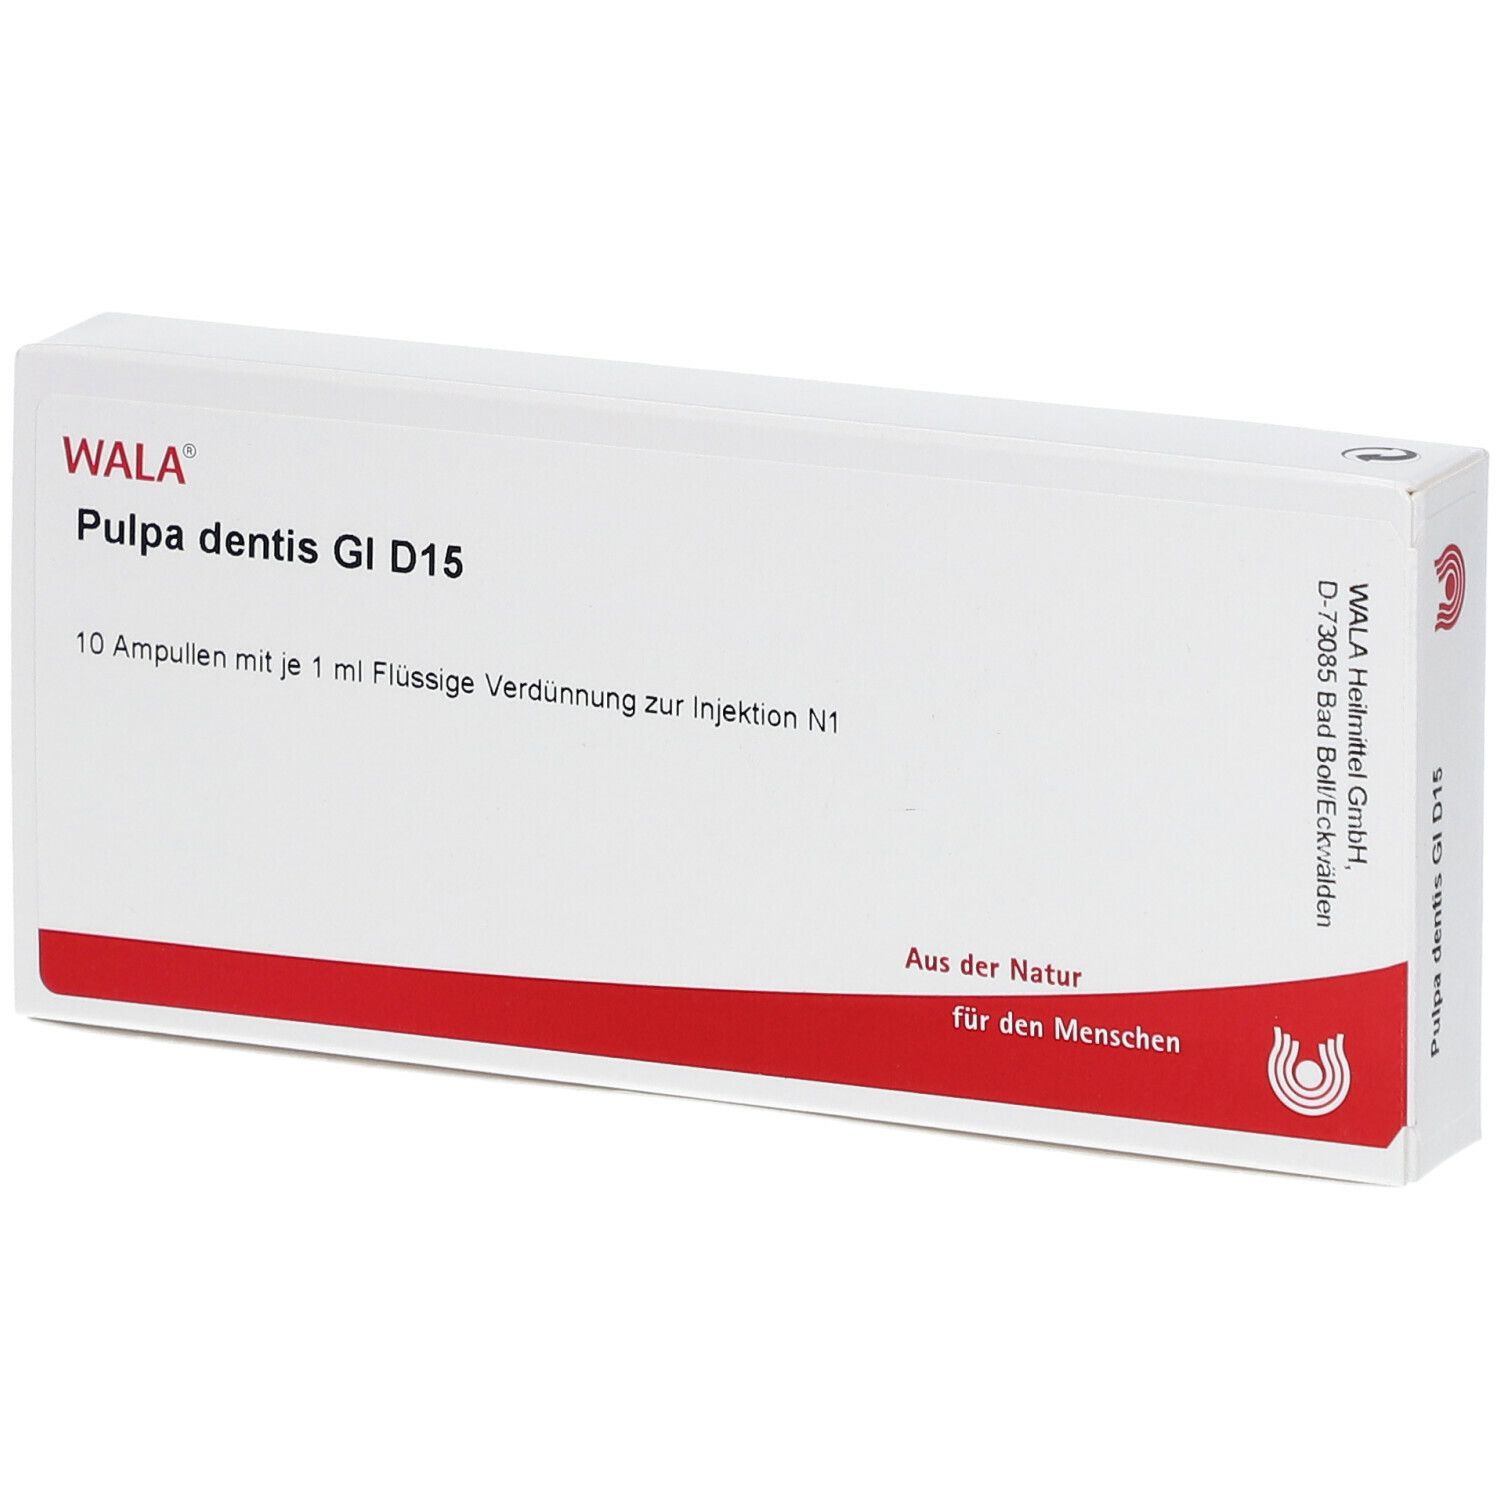 WALA® Pulpa dentis Gl D 15